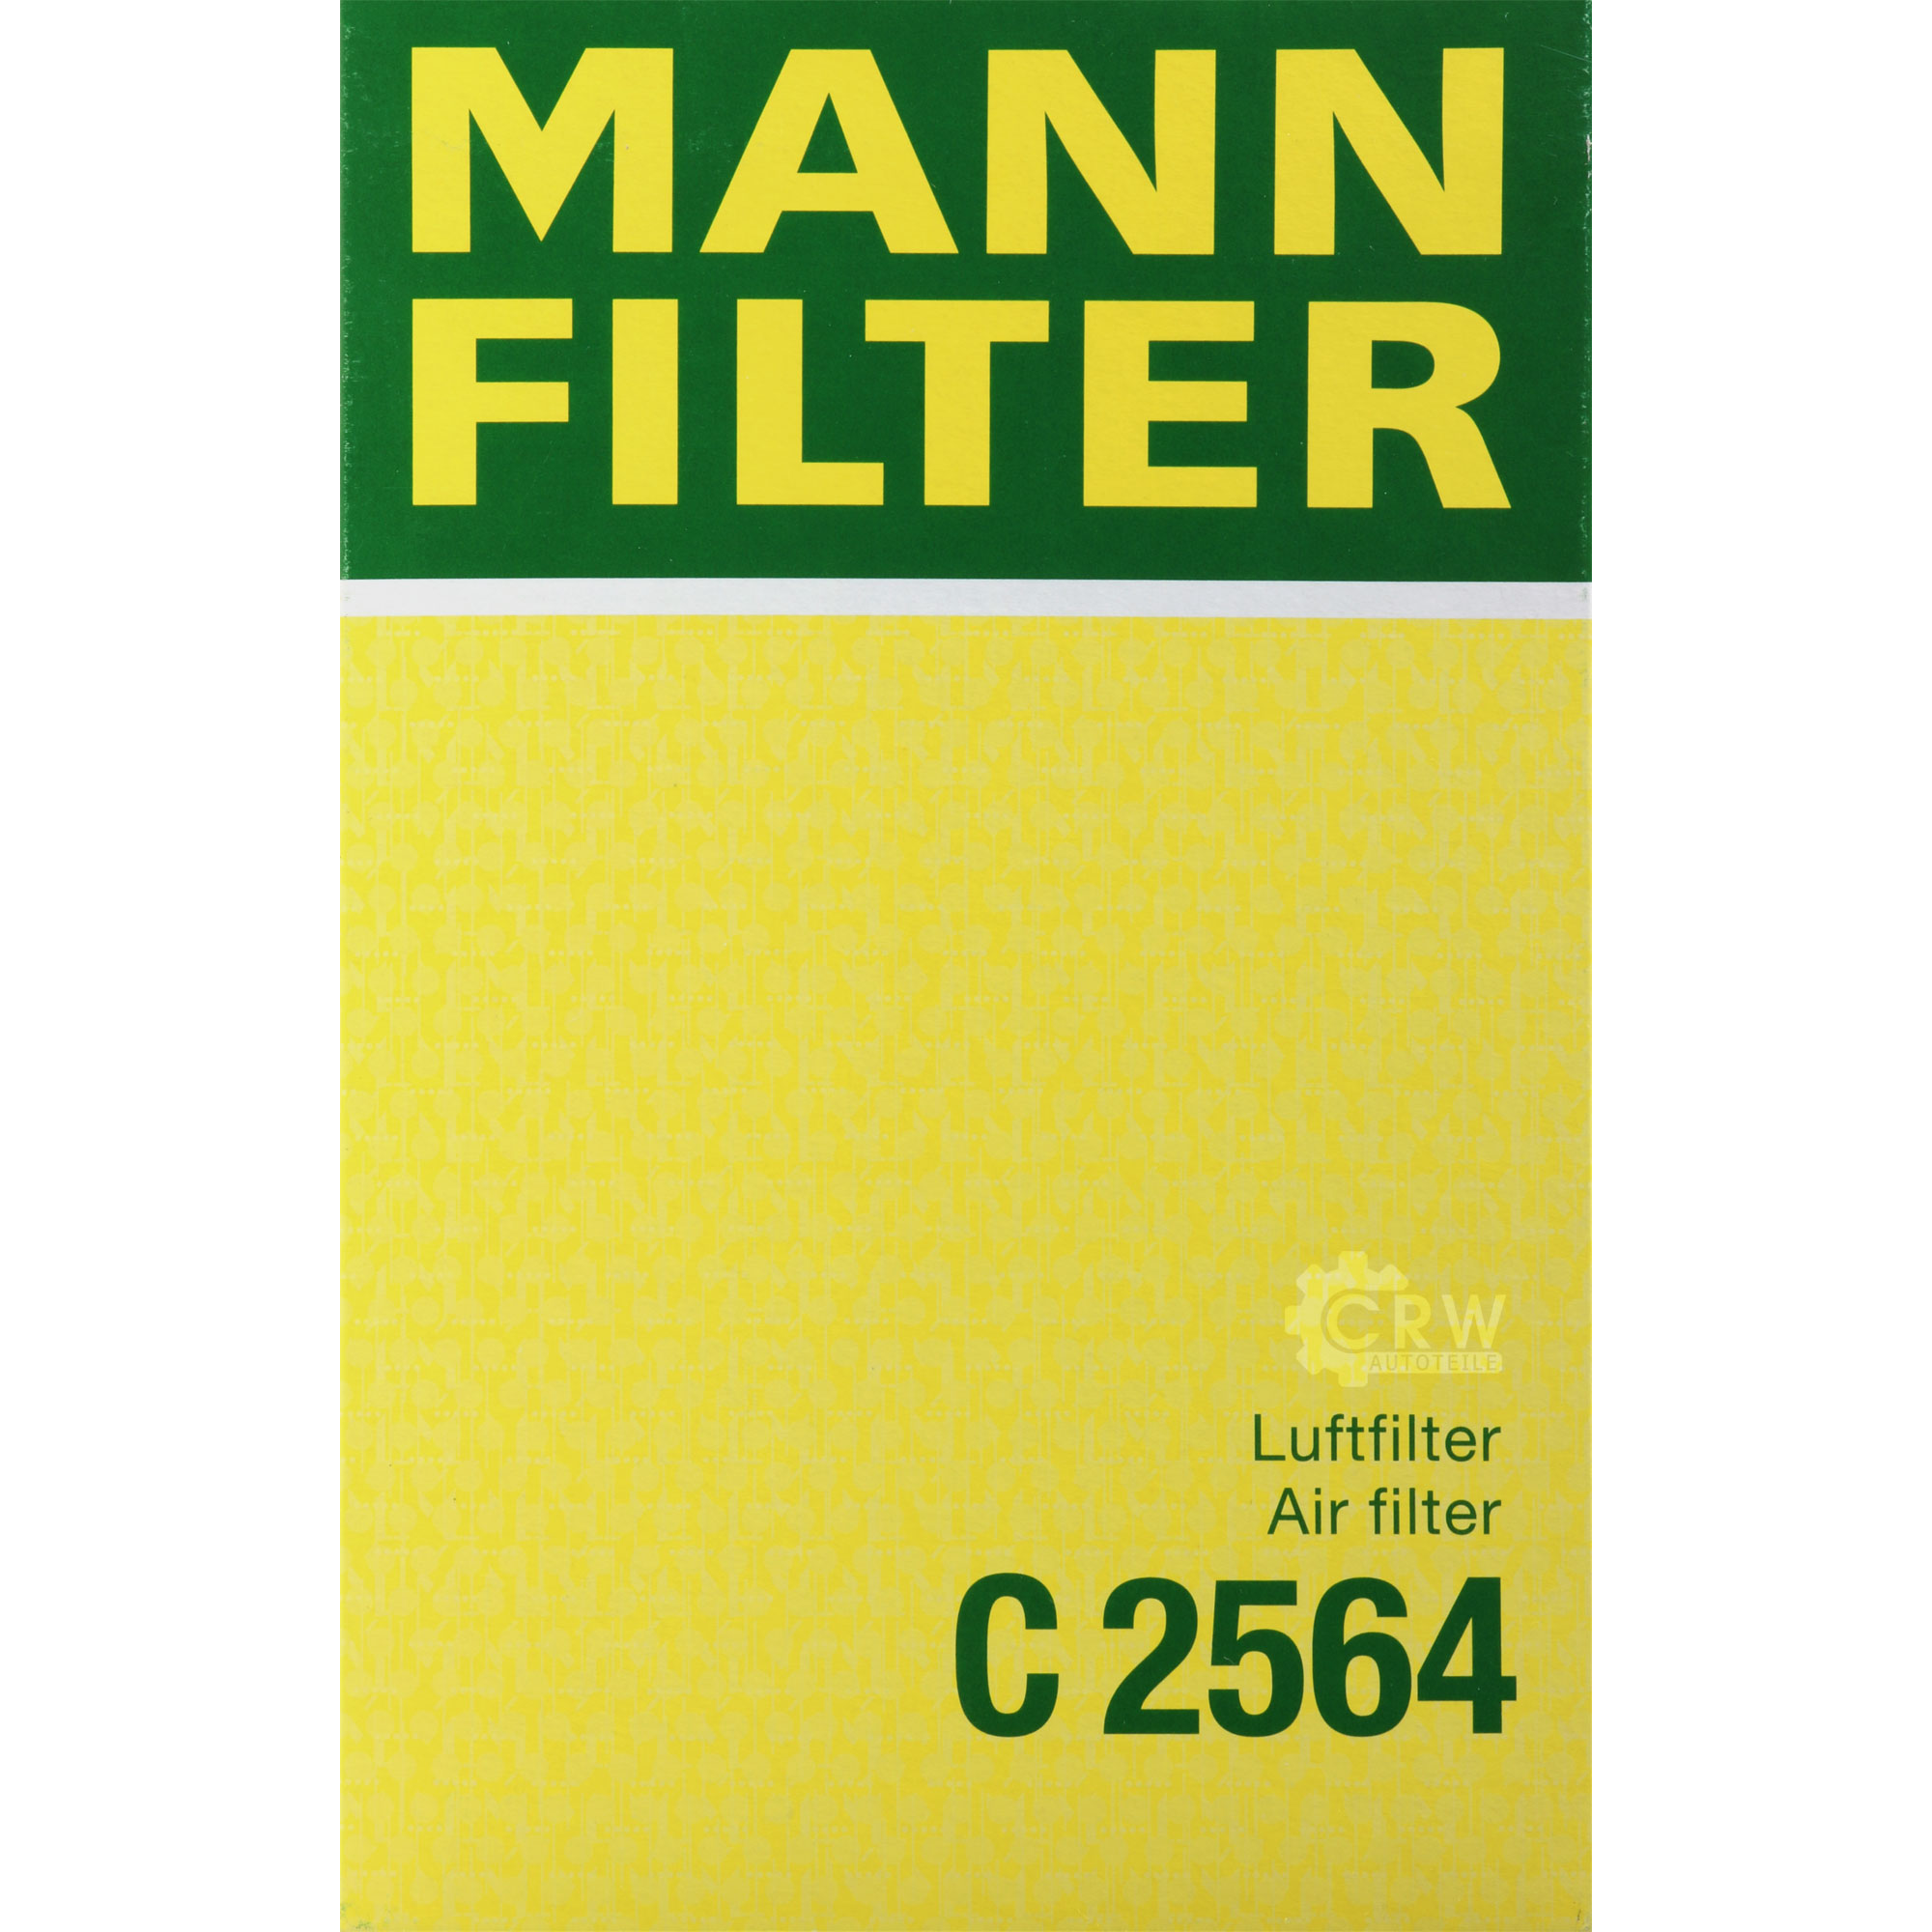 MANN-FILTER Luftfilter für Mazda Premacy CP 1.9 2.0 323 F VI BJ 1.6 1.5 16V BA